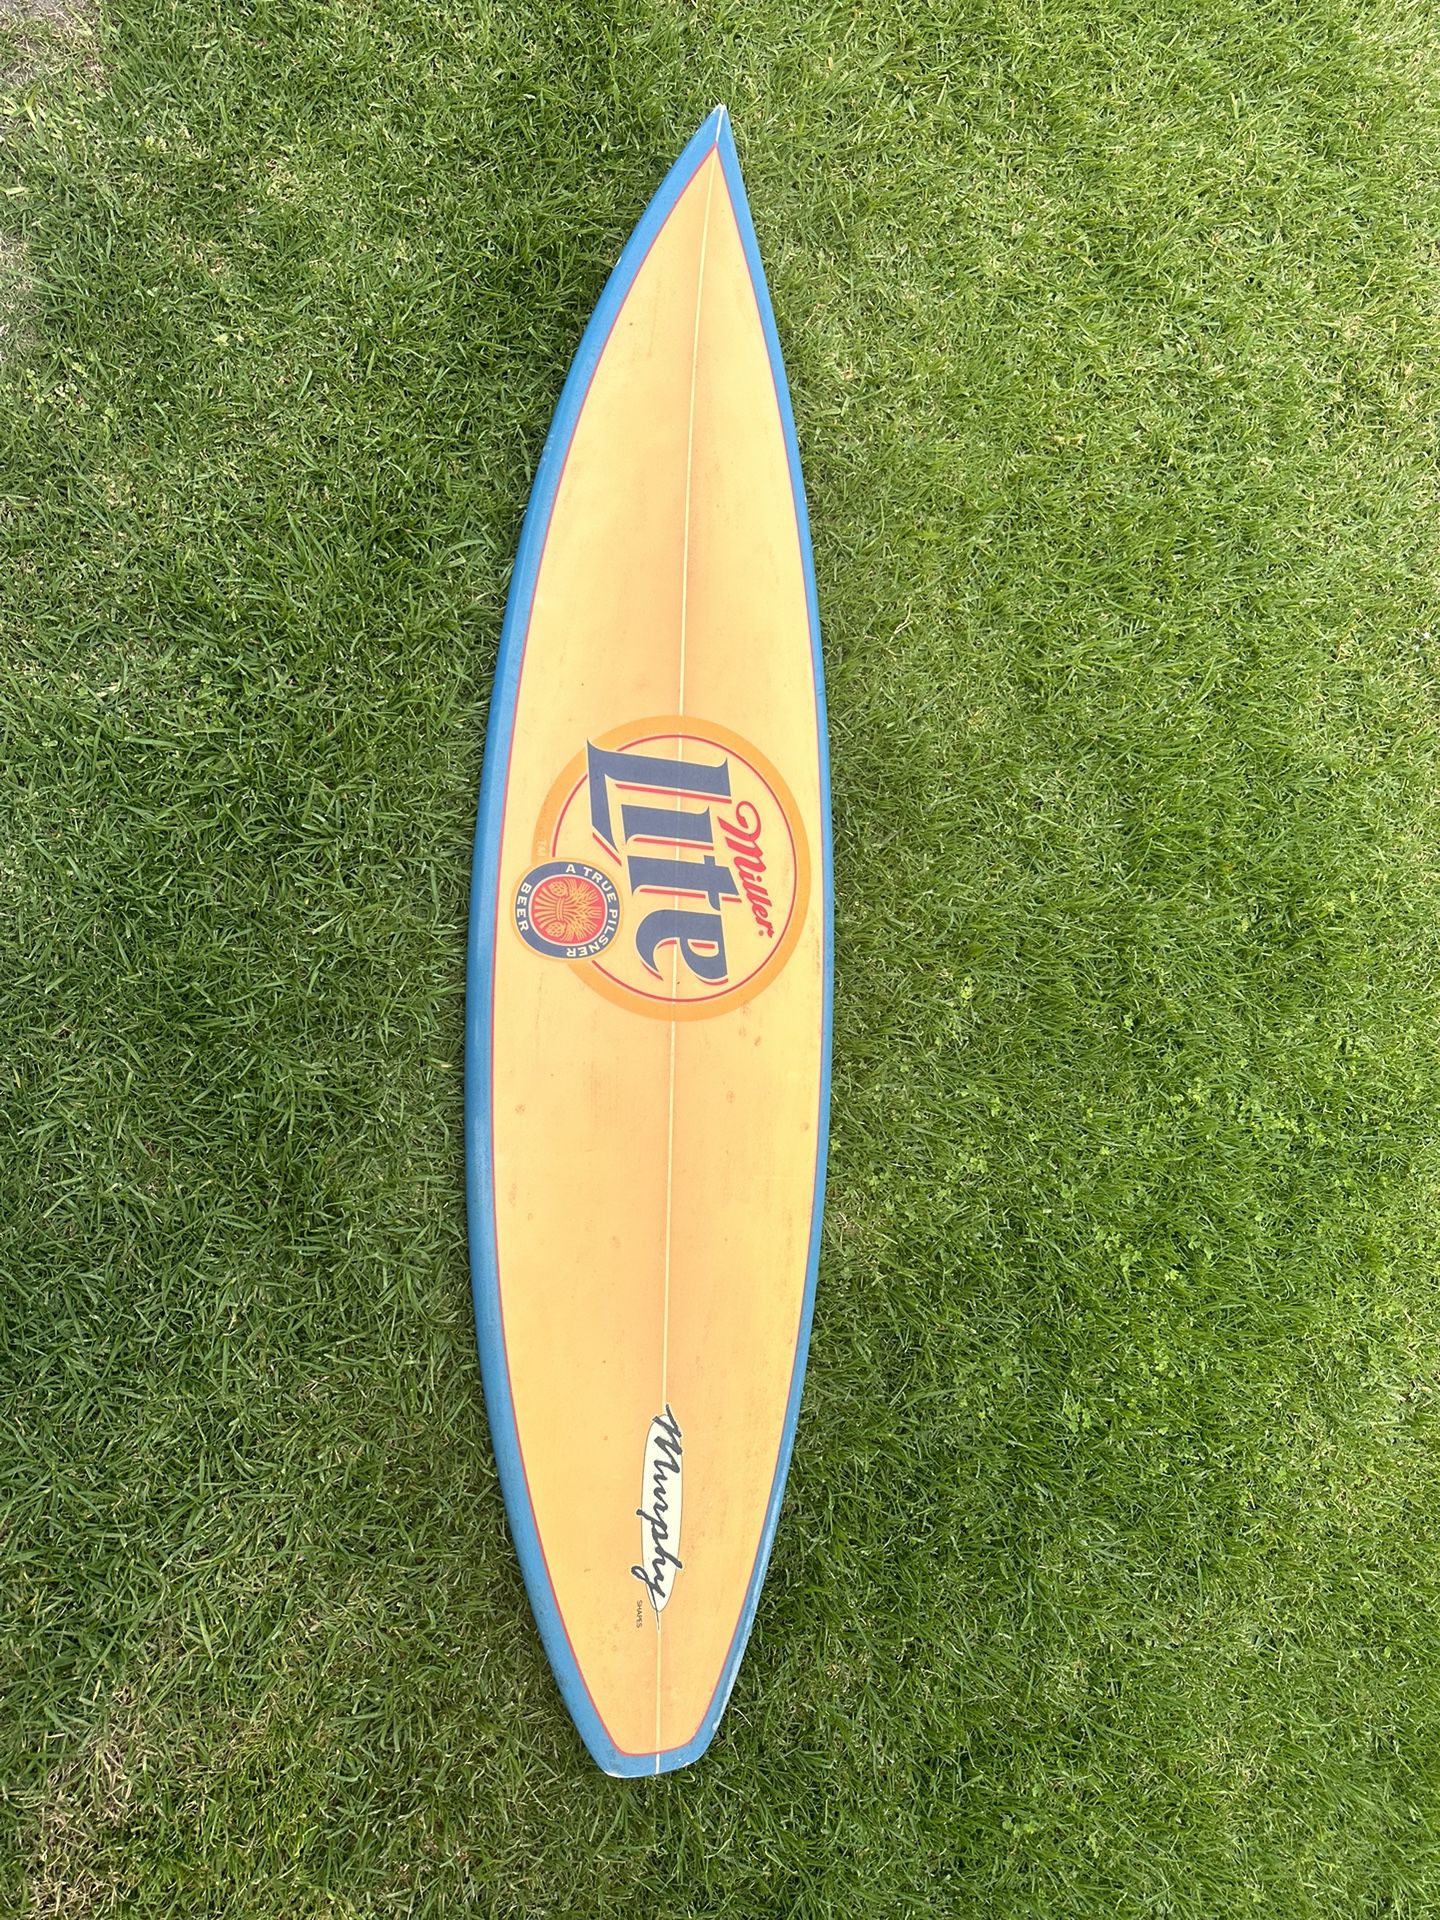 Miller Lite Surfboard